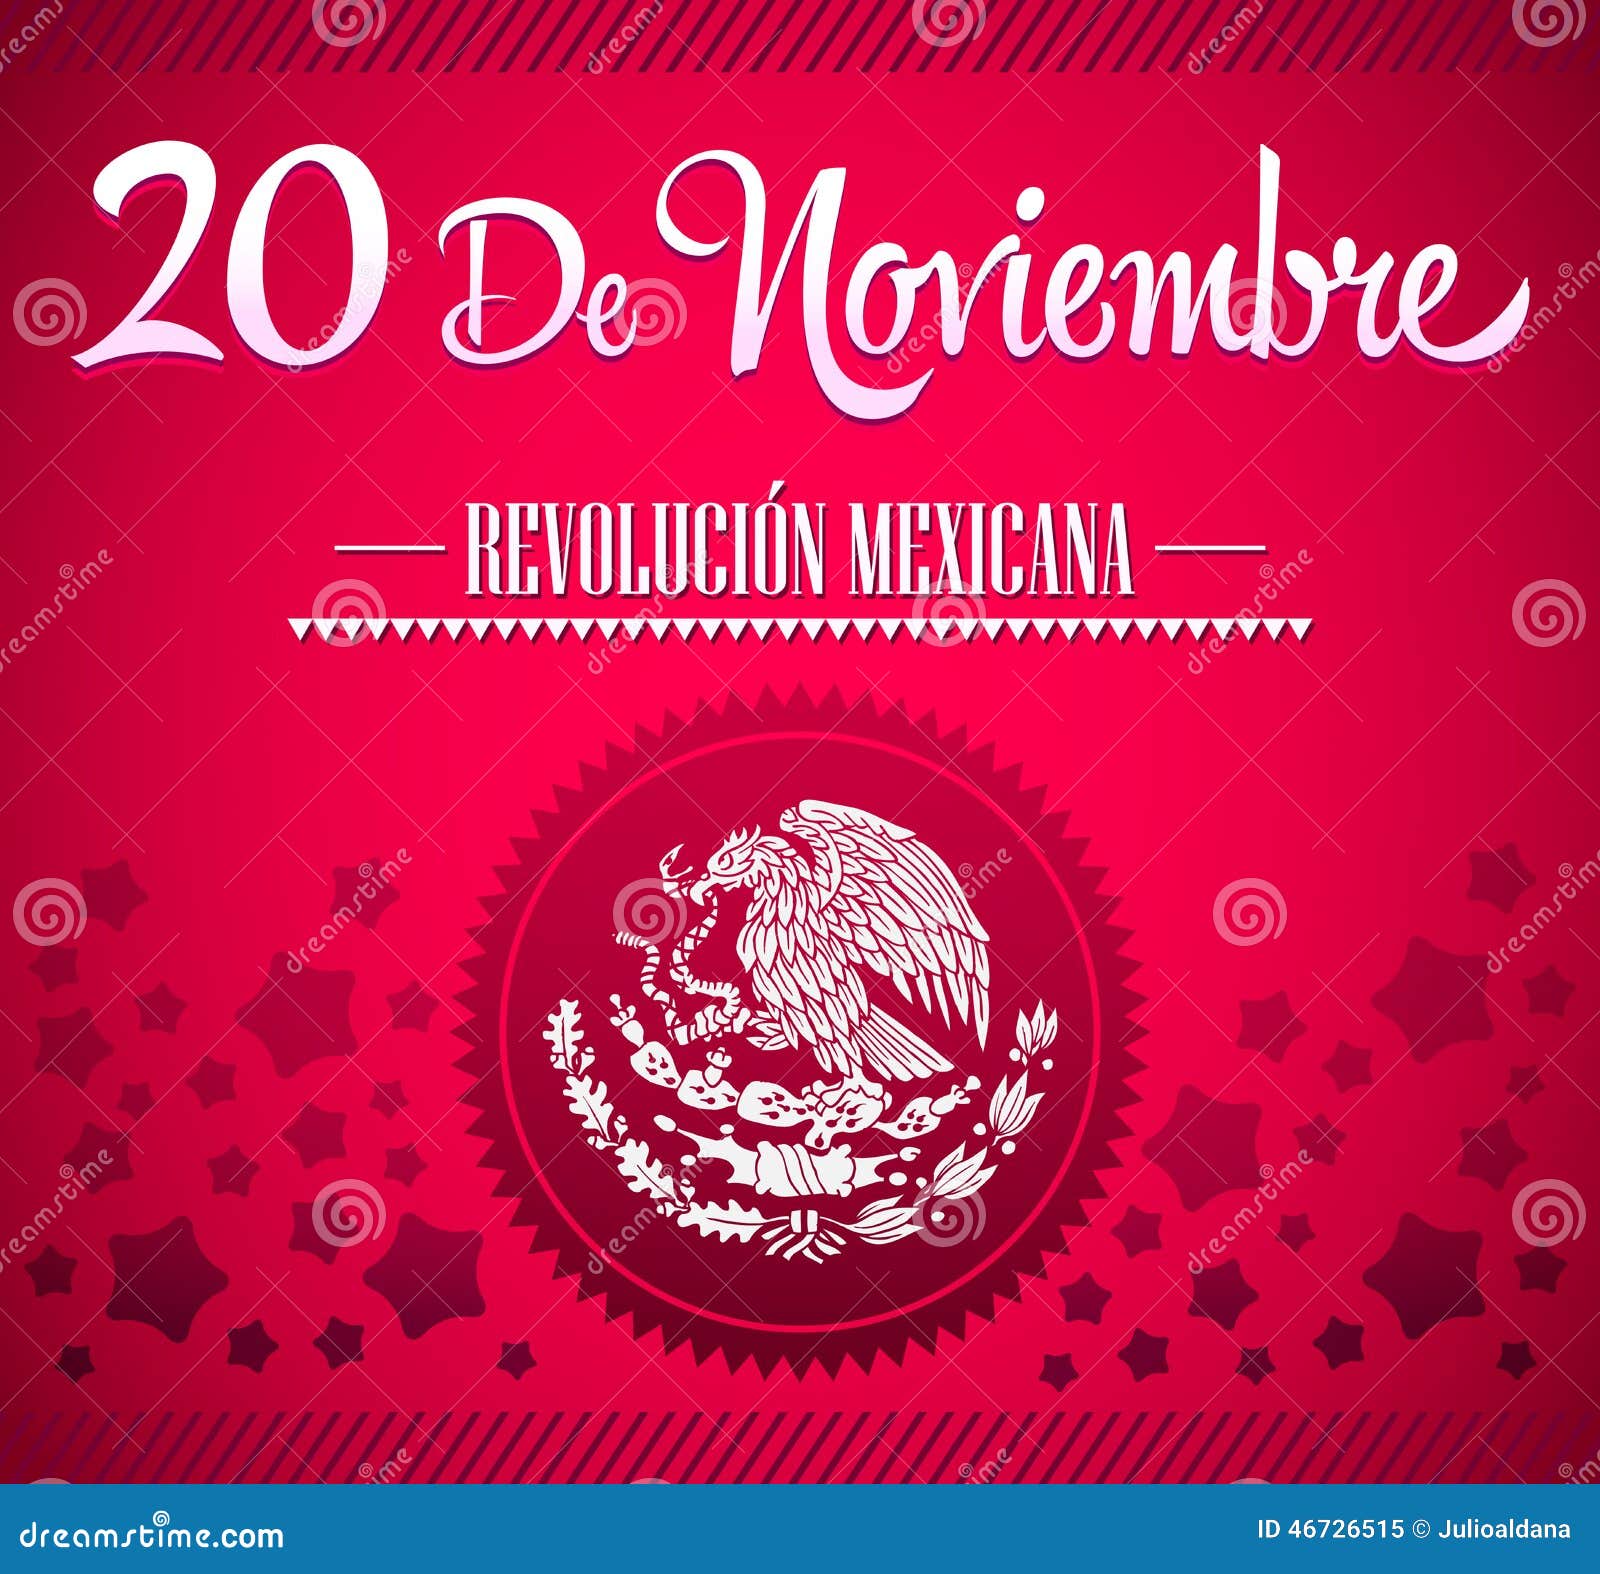 20 de noviembre, revolucion mexicana - mexican revolution spanish text card